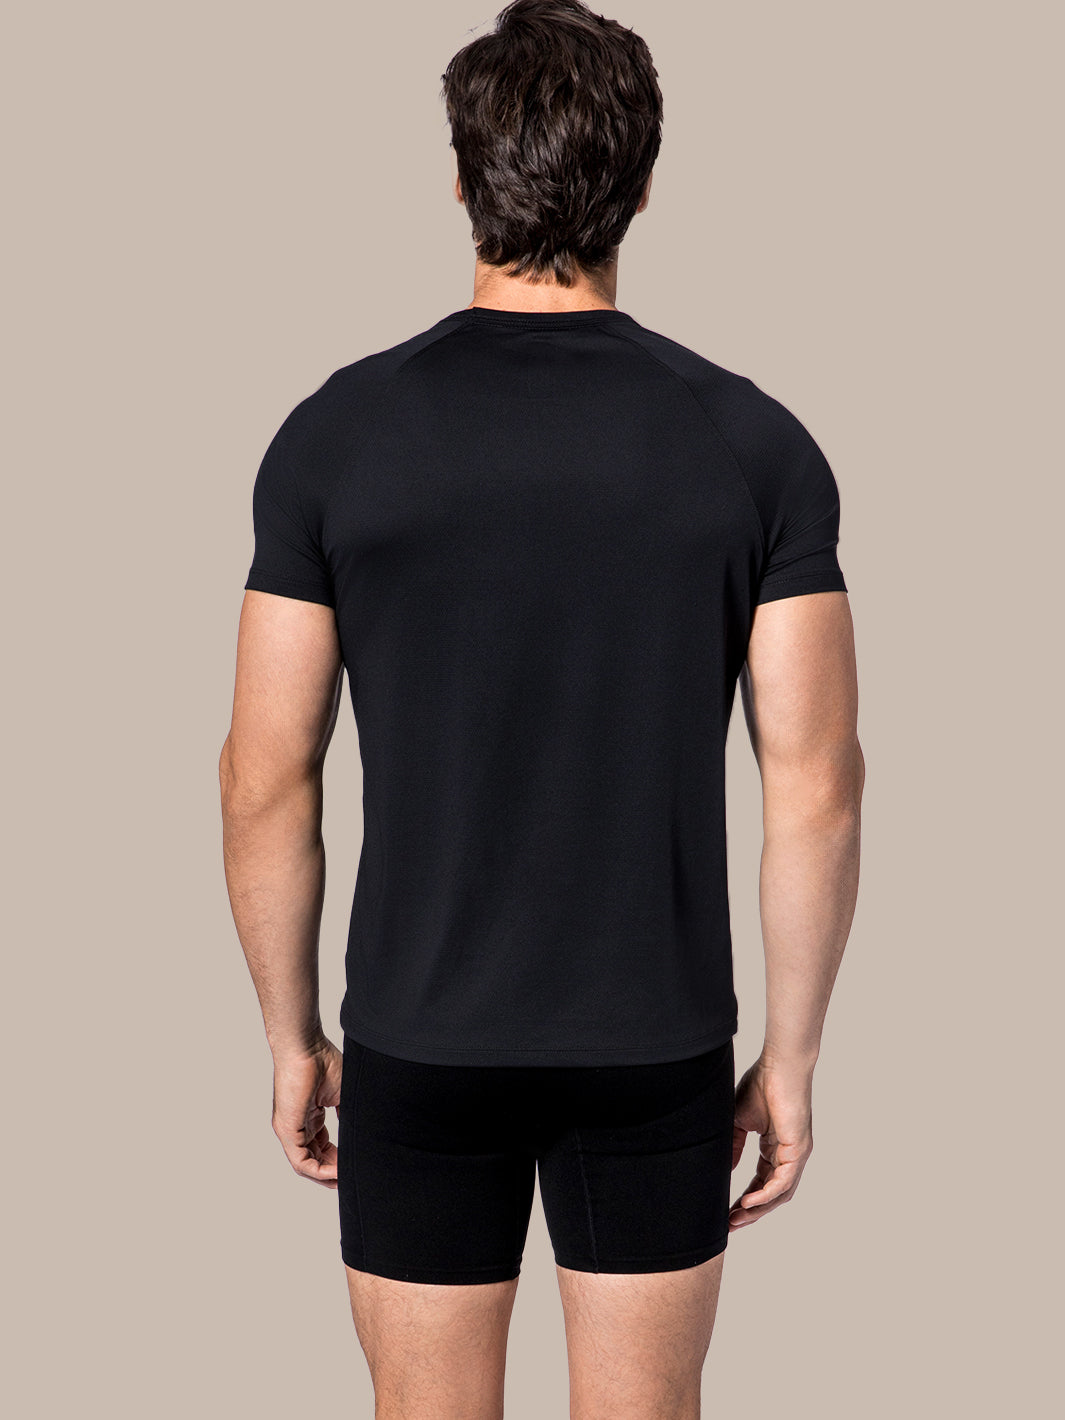 Rear view of model wearing men's black compression shorts, designed for optimal pickleball performance.